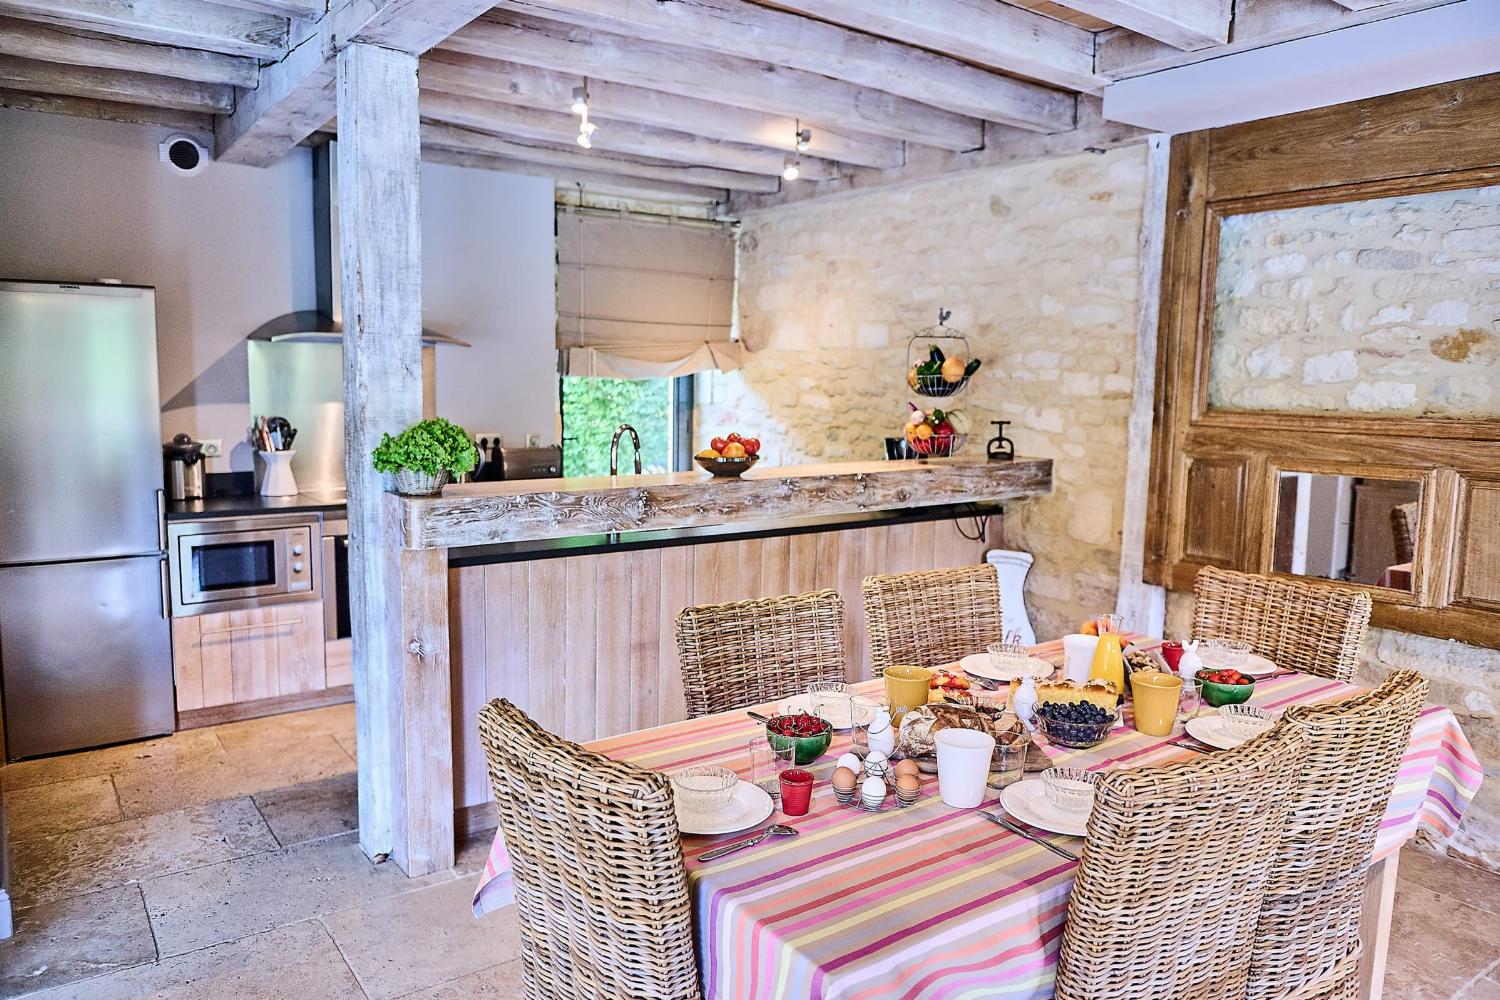 Dining room | Rental home in Dordogne